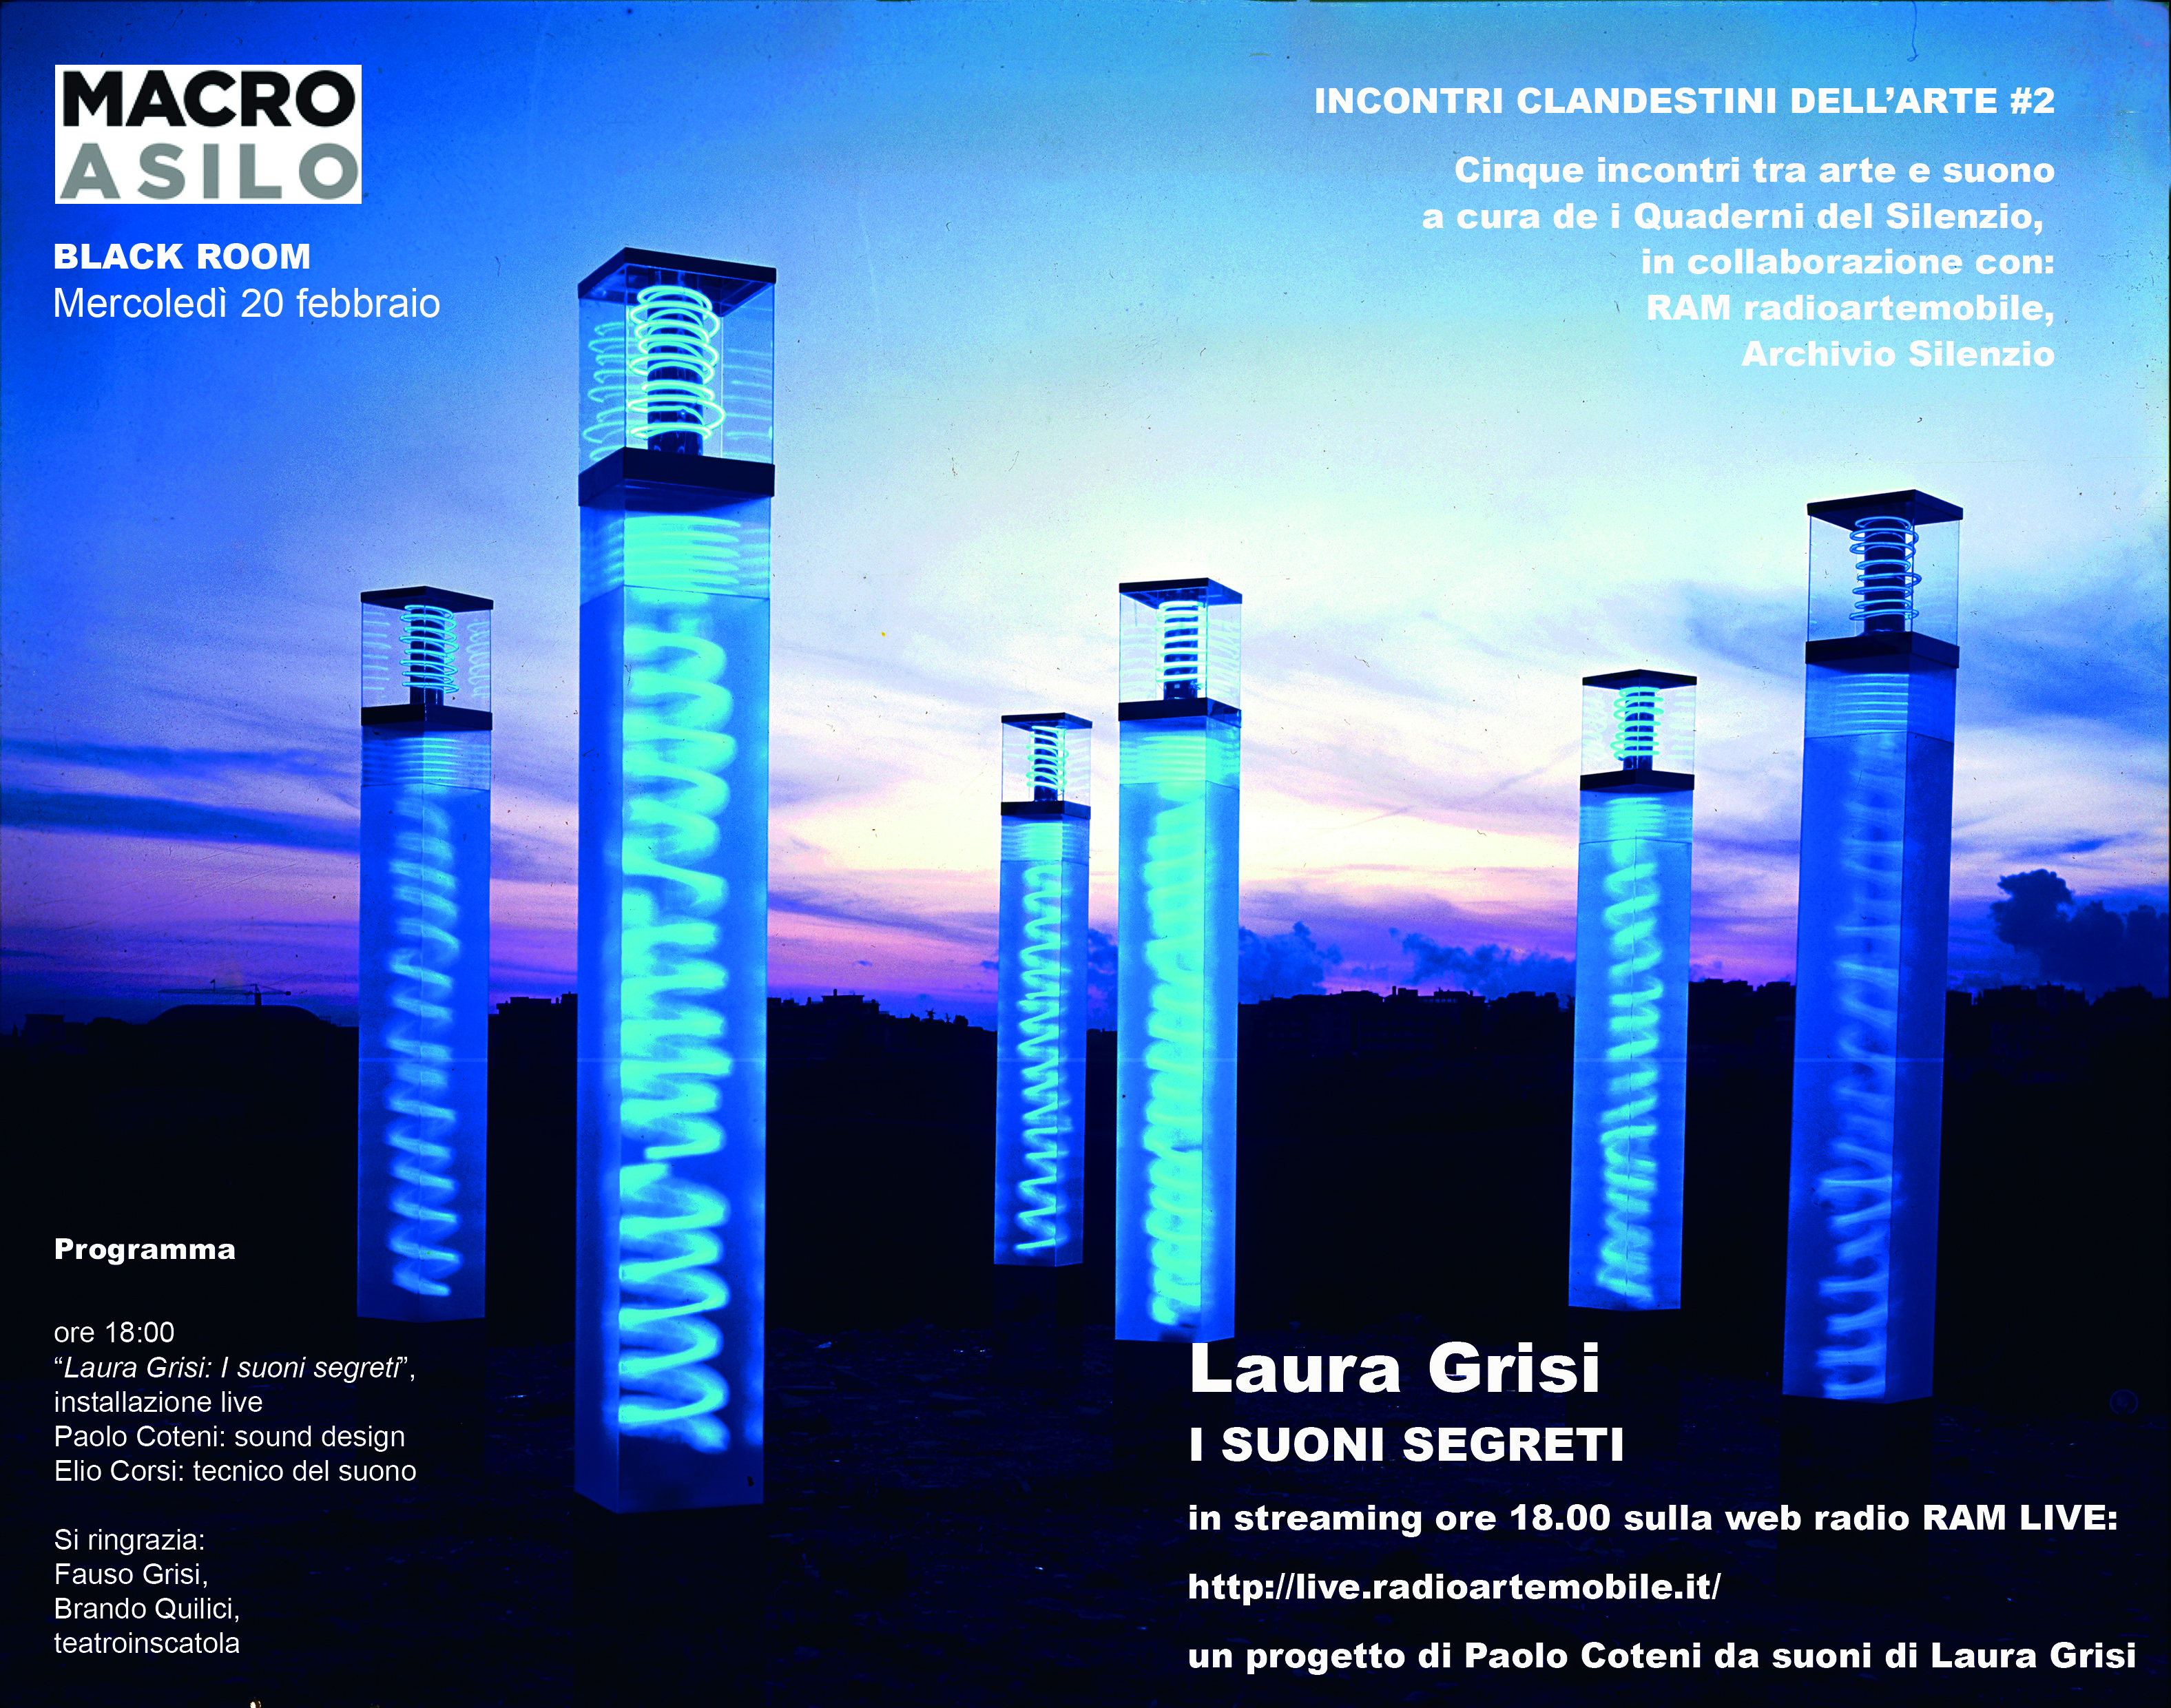 Invitation to Laura Grisi Macro